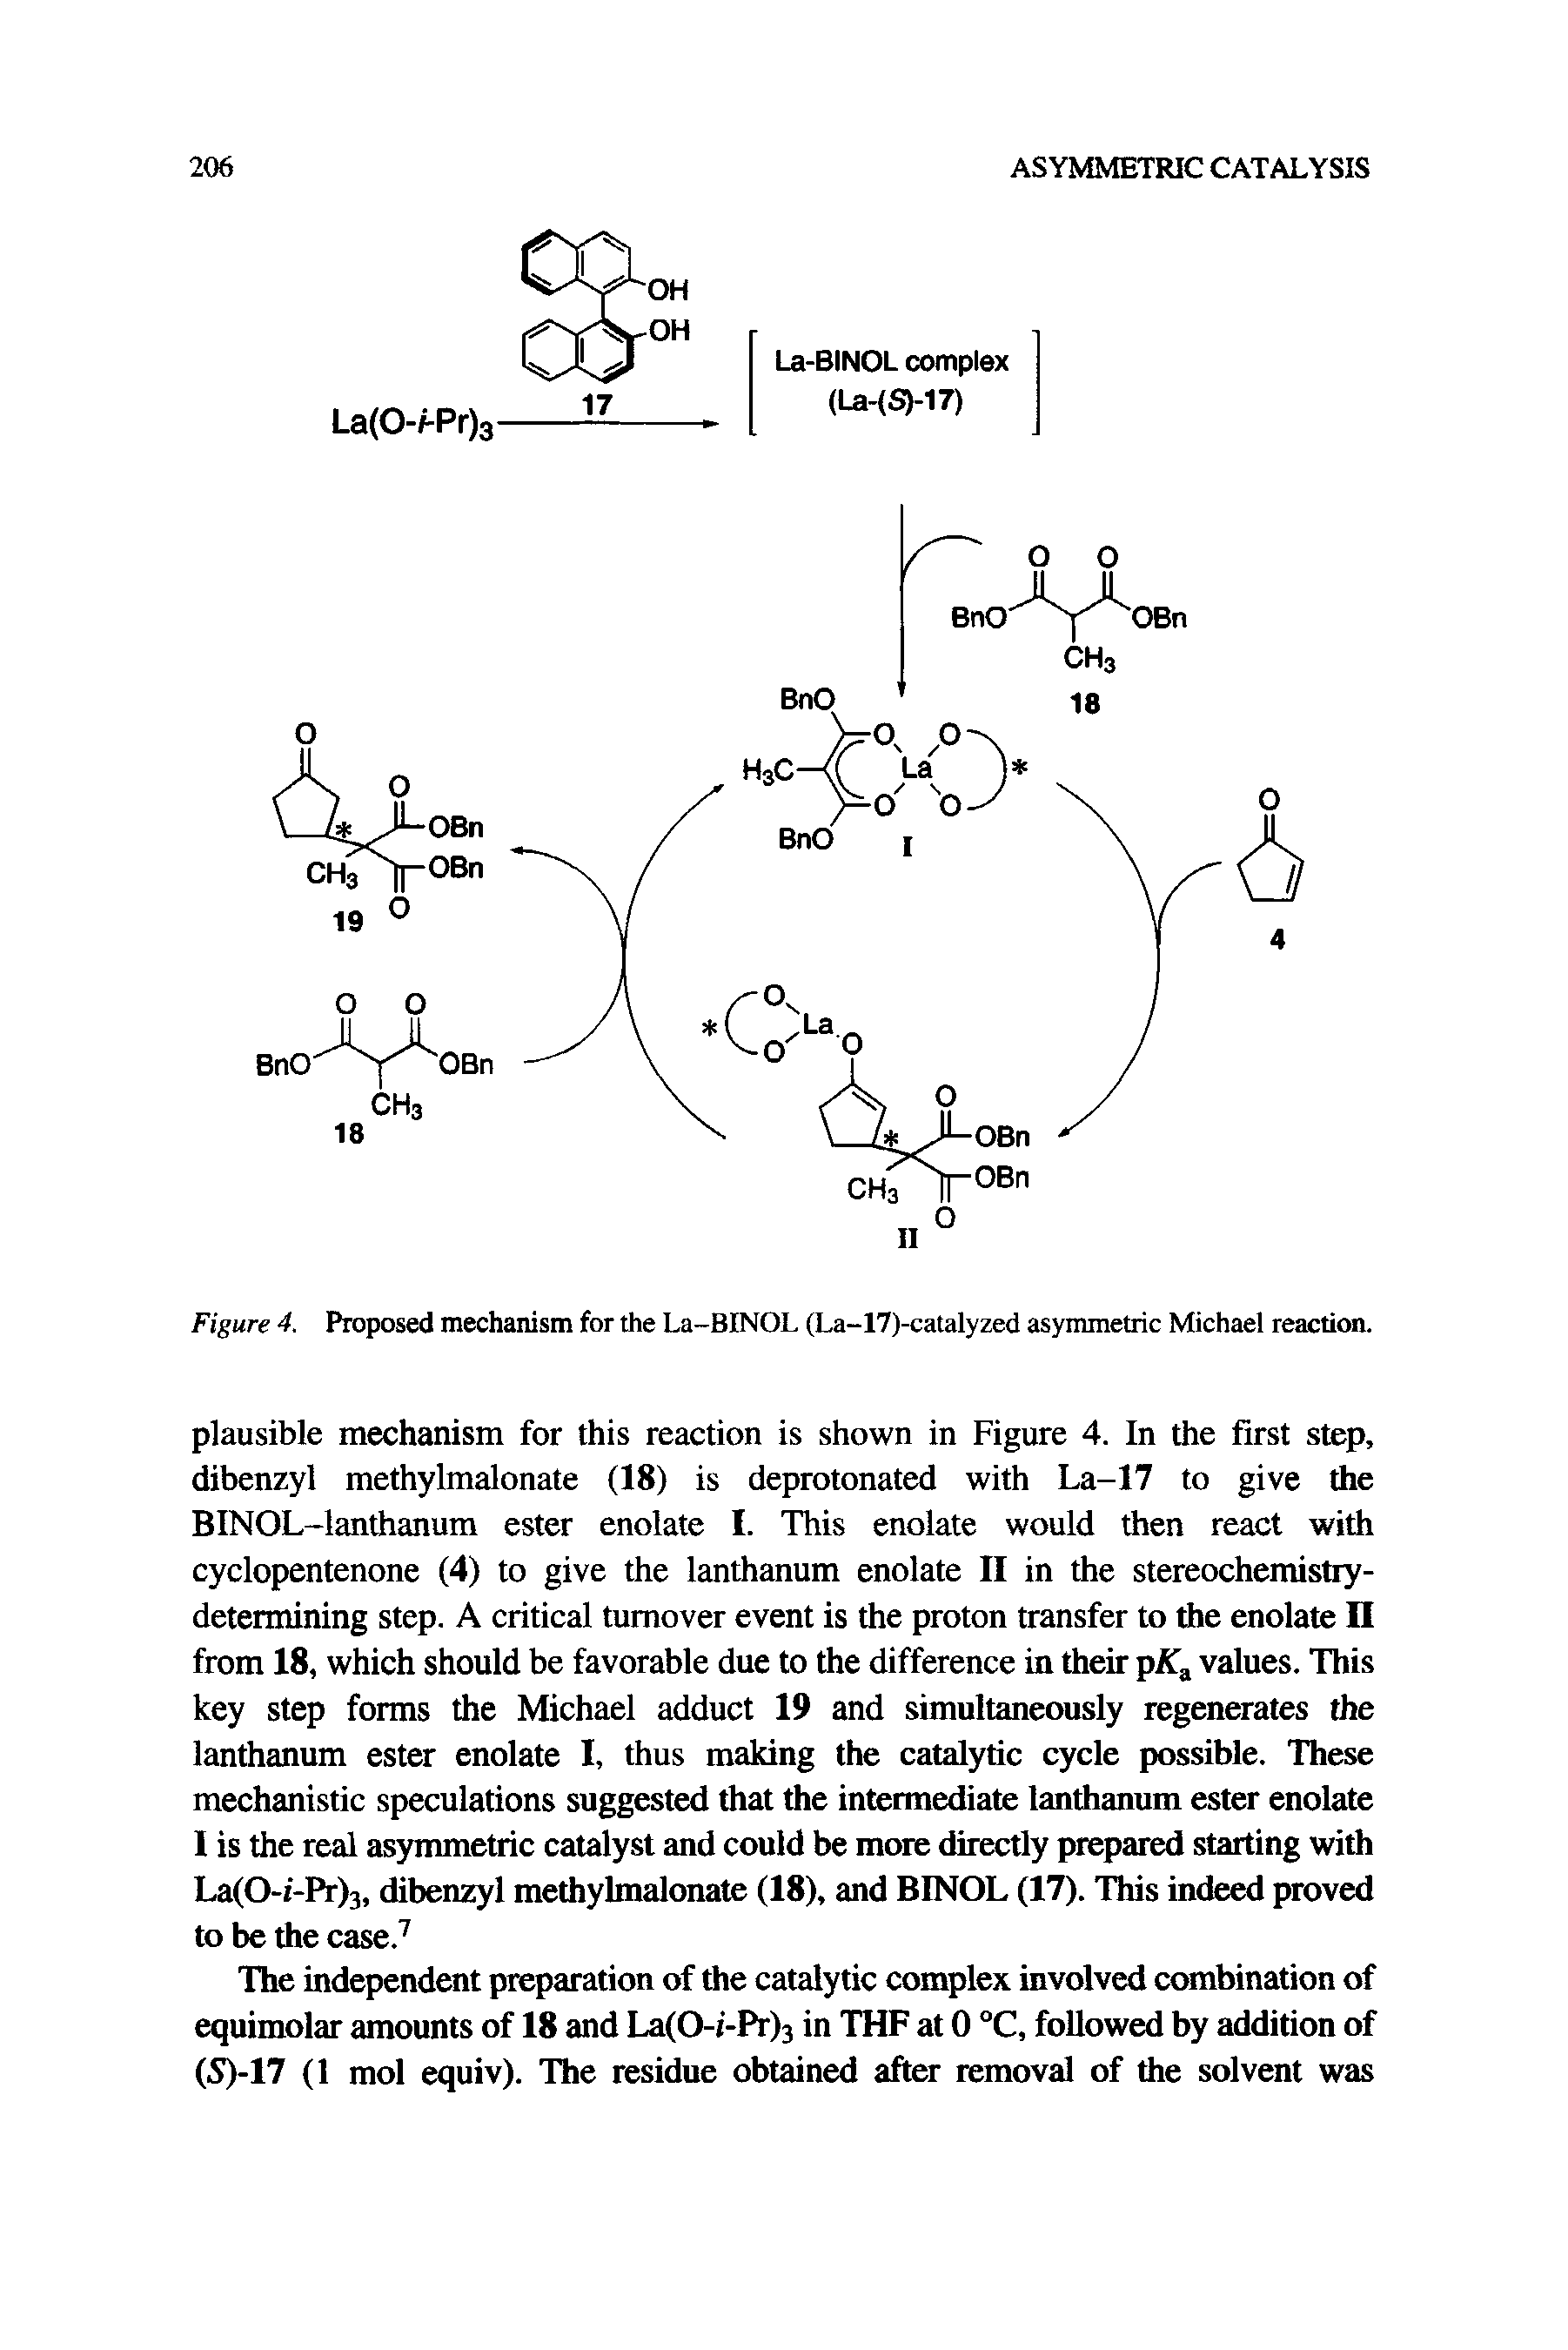 Figure 4. Proposed mechanism for the La-BINOL (La-17)-catalyzed asymmetric Michael reaction.